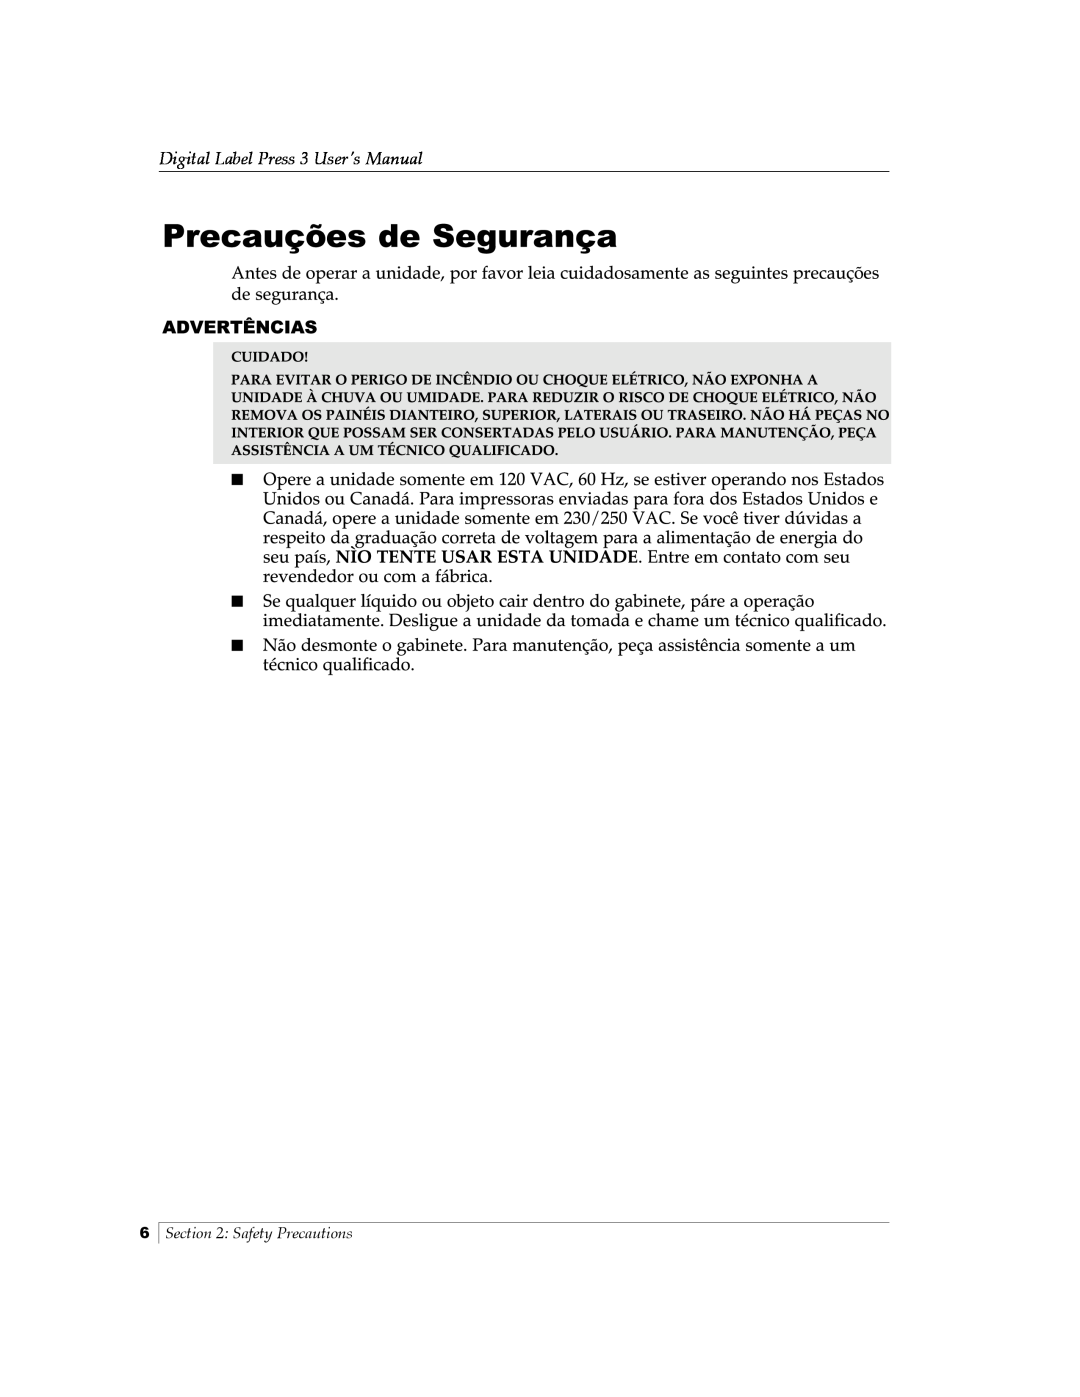 Primera Technology 510212 manual Digital Label Press 3 User’s Manual, Safety Precautions 